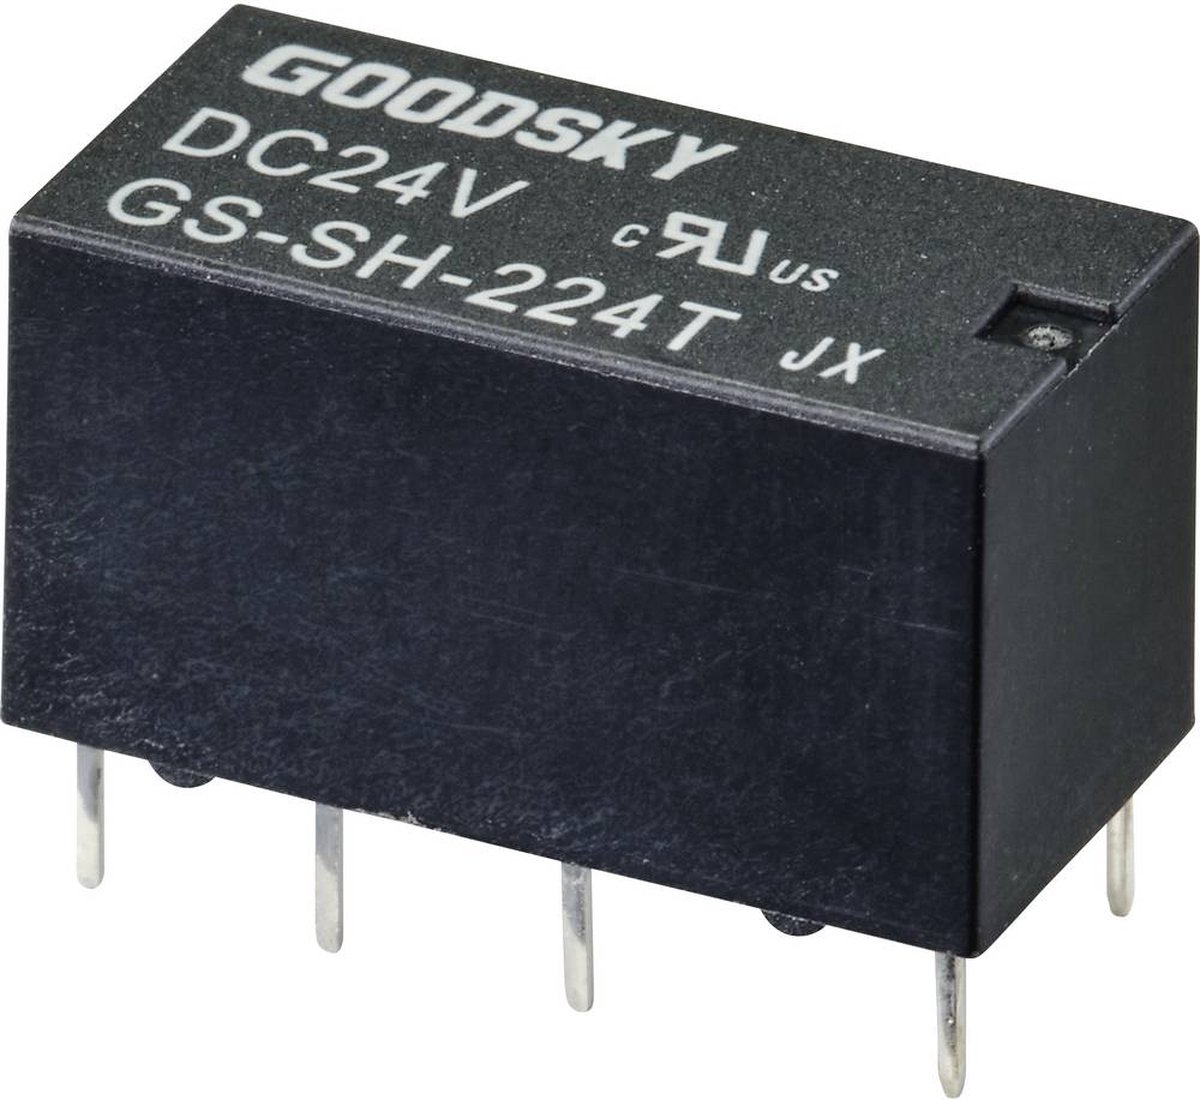 GoodSky GS-SH-224T Printrelais 24 V/DC 2 A 2x wisselcontact 1 stuk(s) Tube